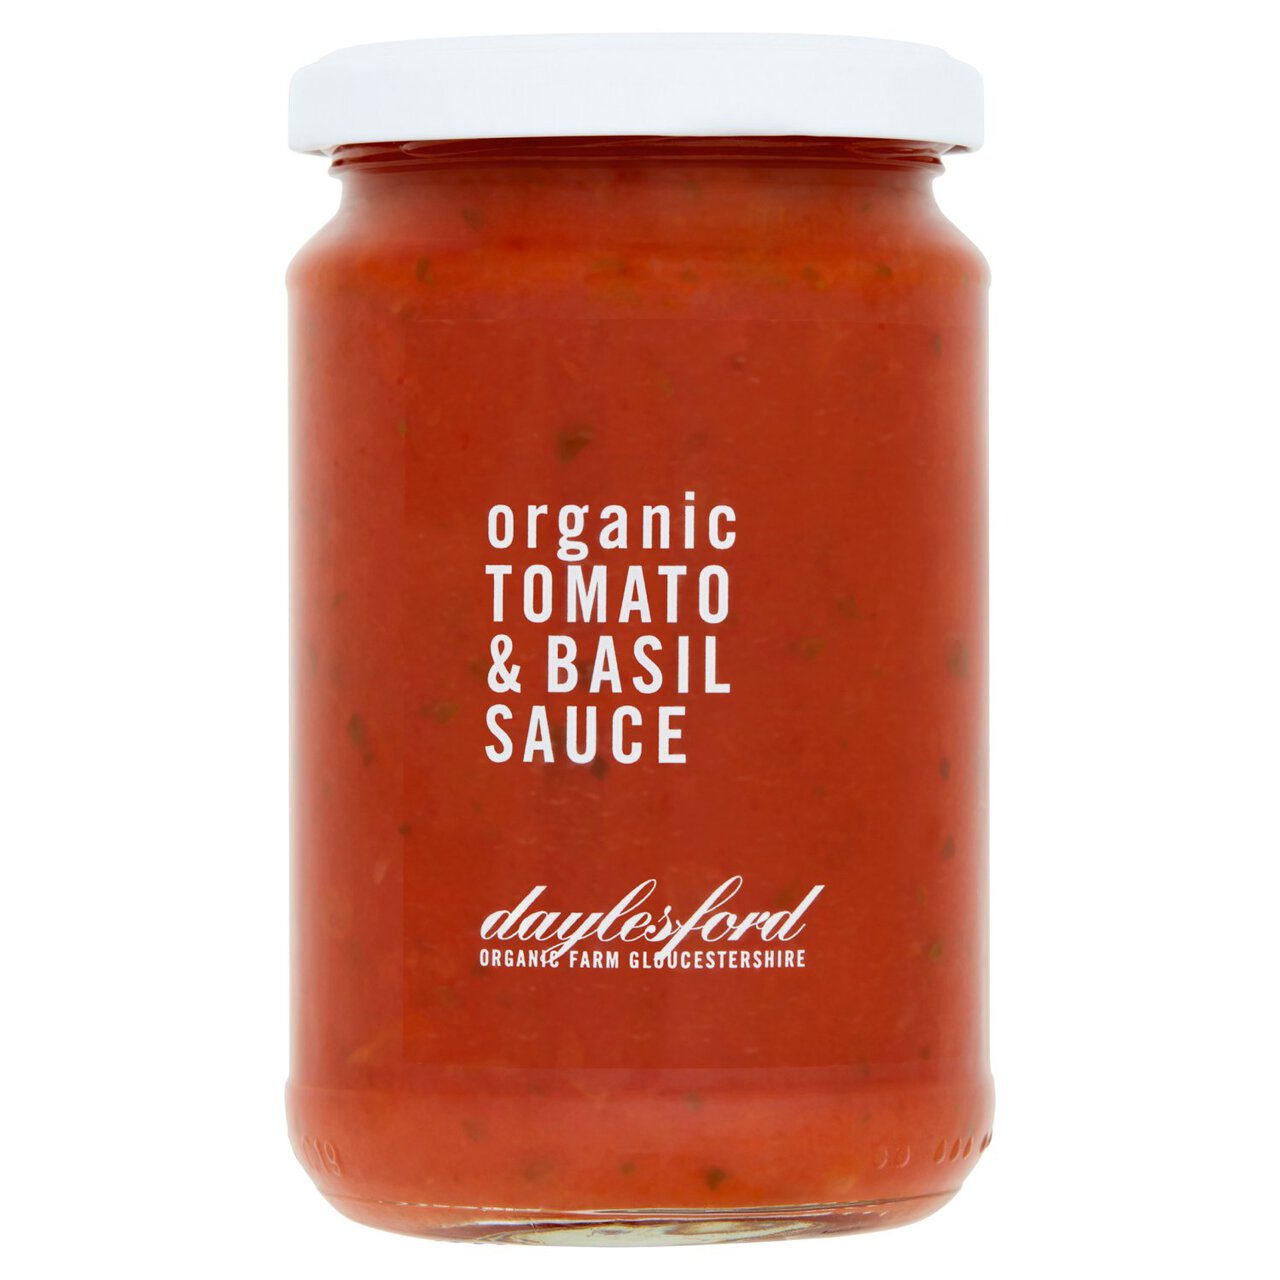 Daylesford Organic Tomato & Basil Sauce 280g